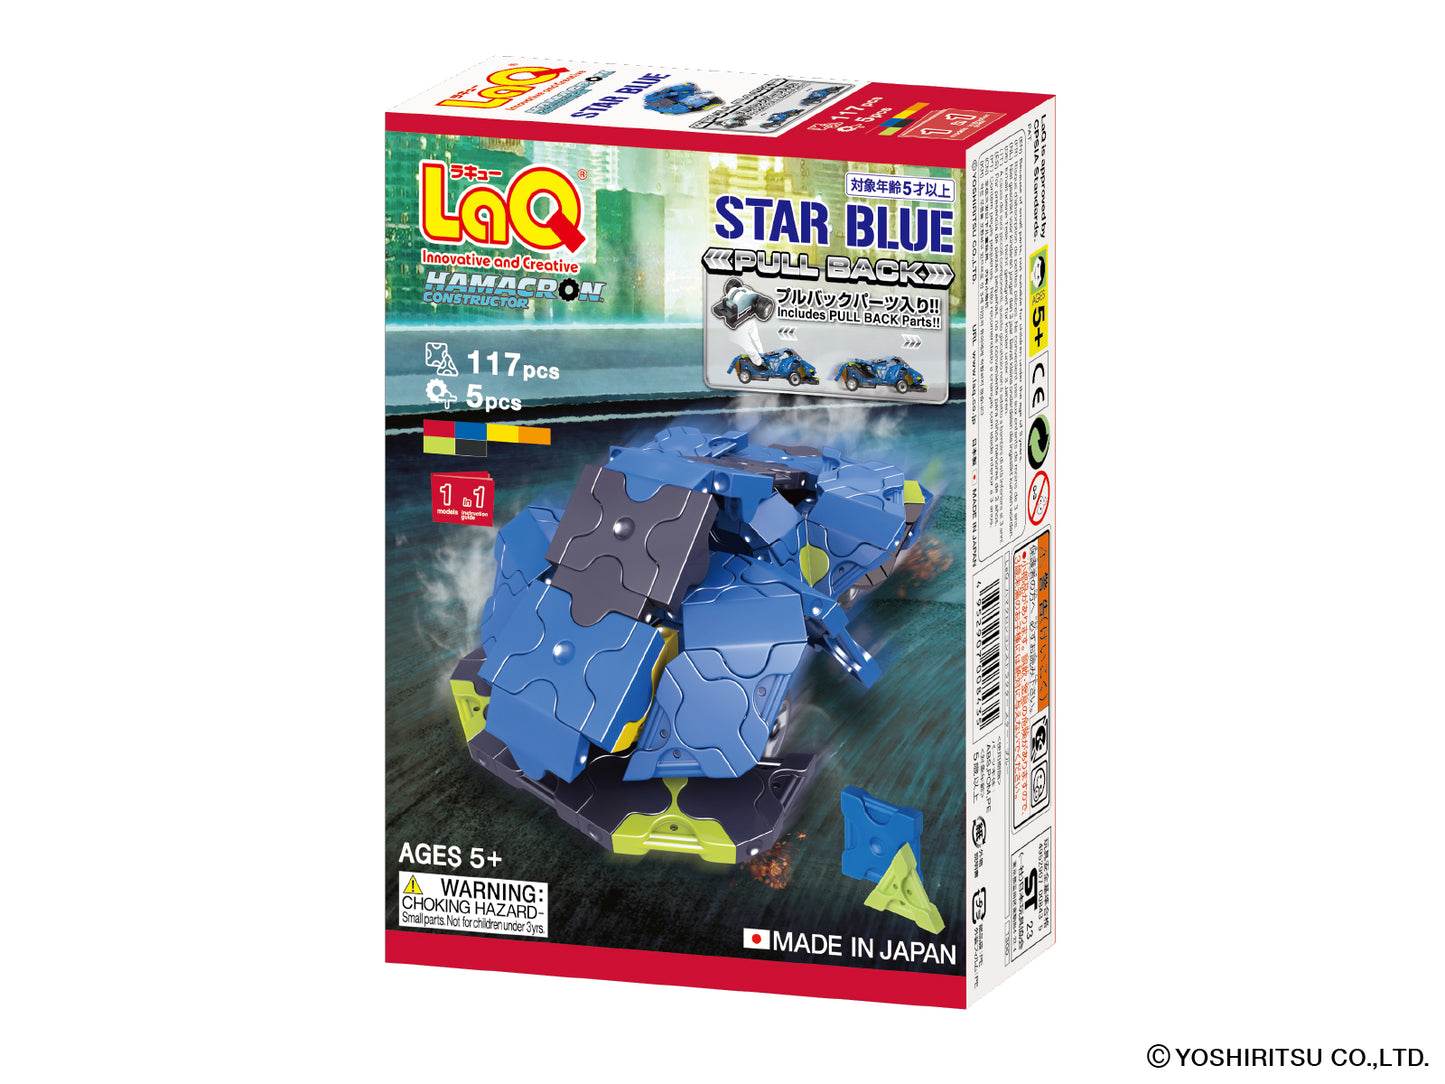 LaQ Hamacron Constructor Star Blue Pull-back